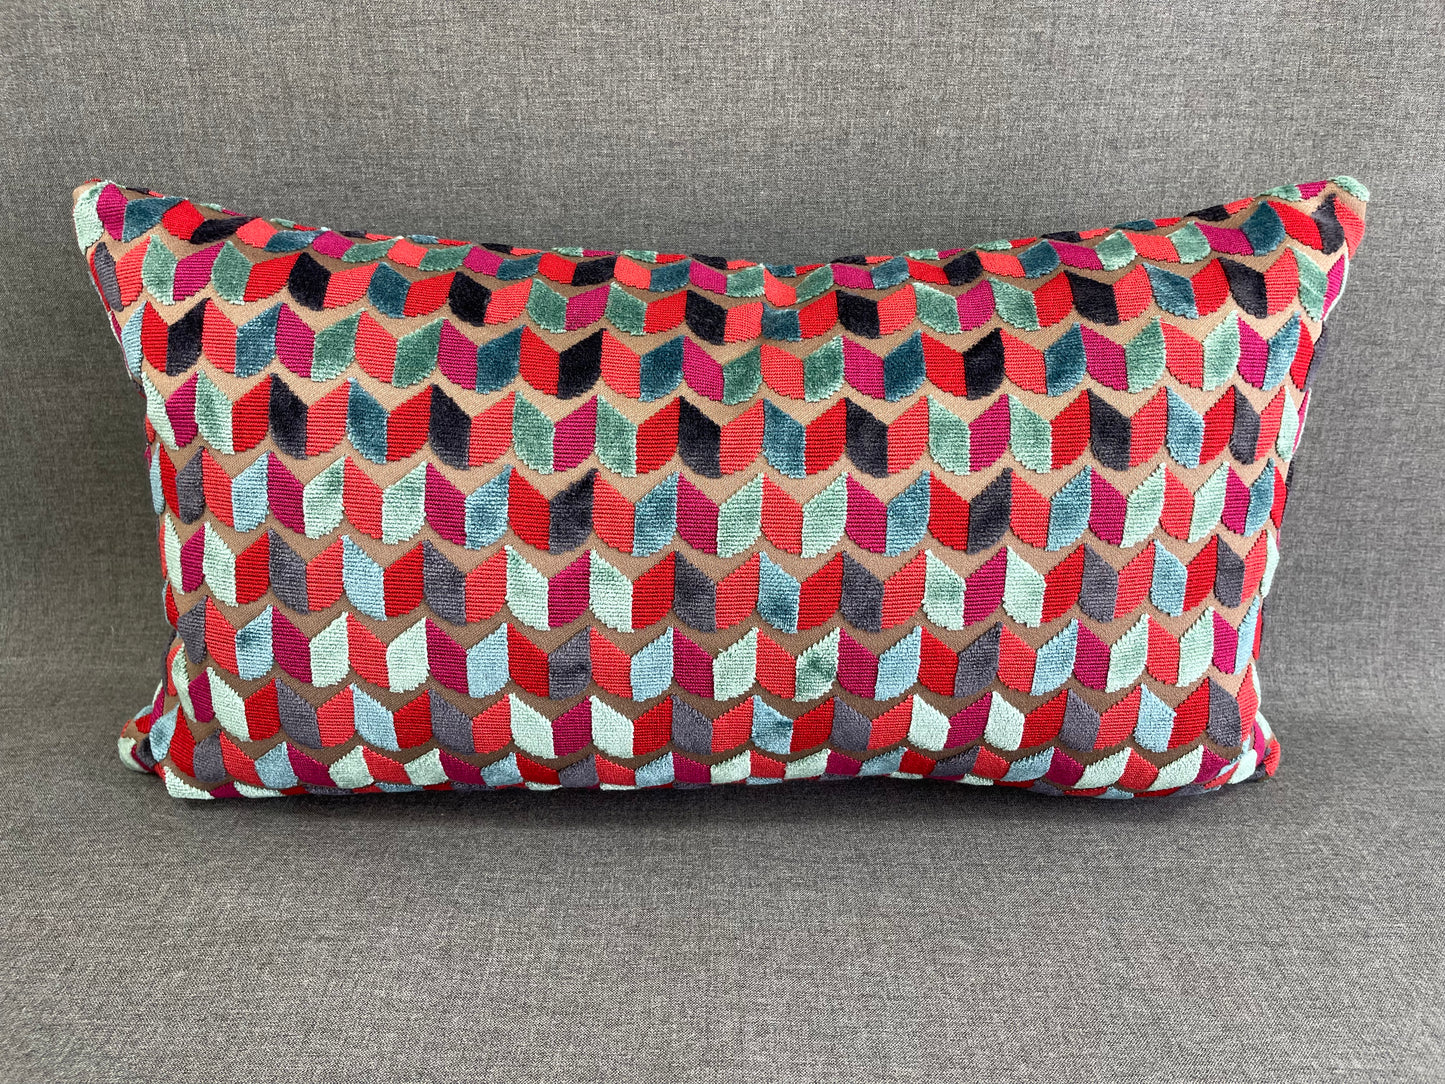 Luxury Lumbar Pillow 24" x 14" - Court Jester; Bright Green, Red, Blue in a geometric cut velvet pattern